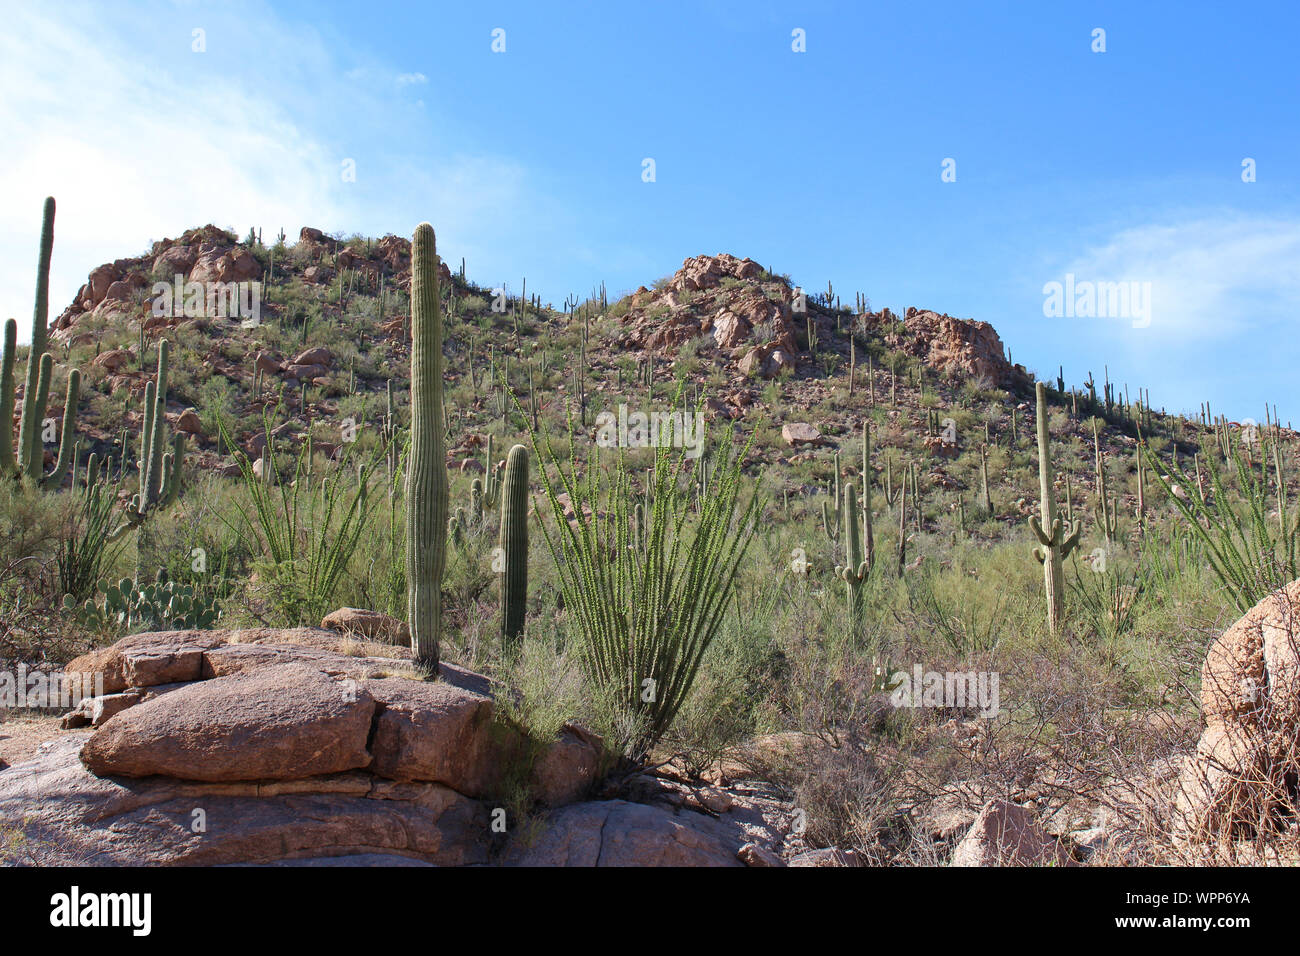 A desert mountainside landscape with Saguaro Cacti, Prickly Pear, Ocotillo, Palo Verde trees and scrub brush in Saguaro National Park, Tucson, Arizona Stock Photo